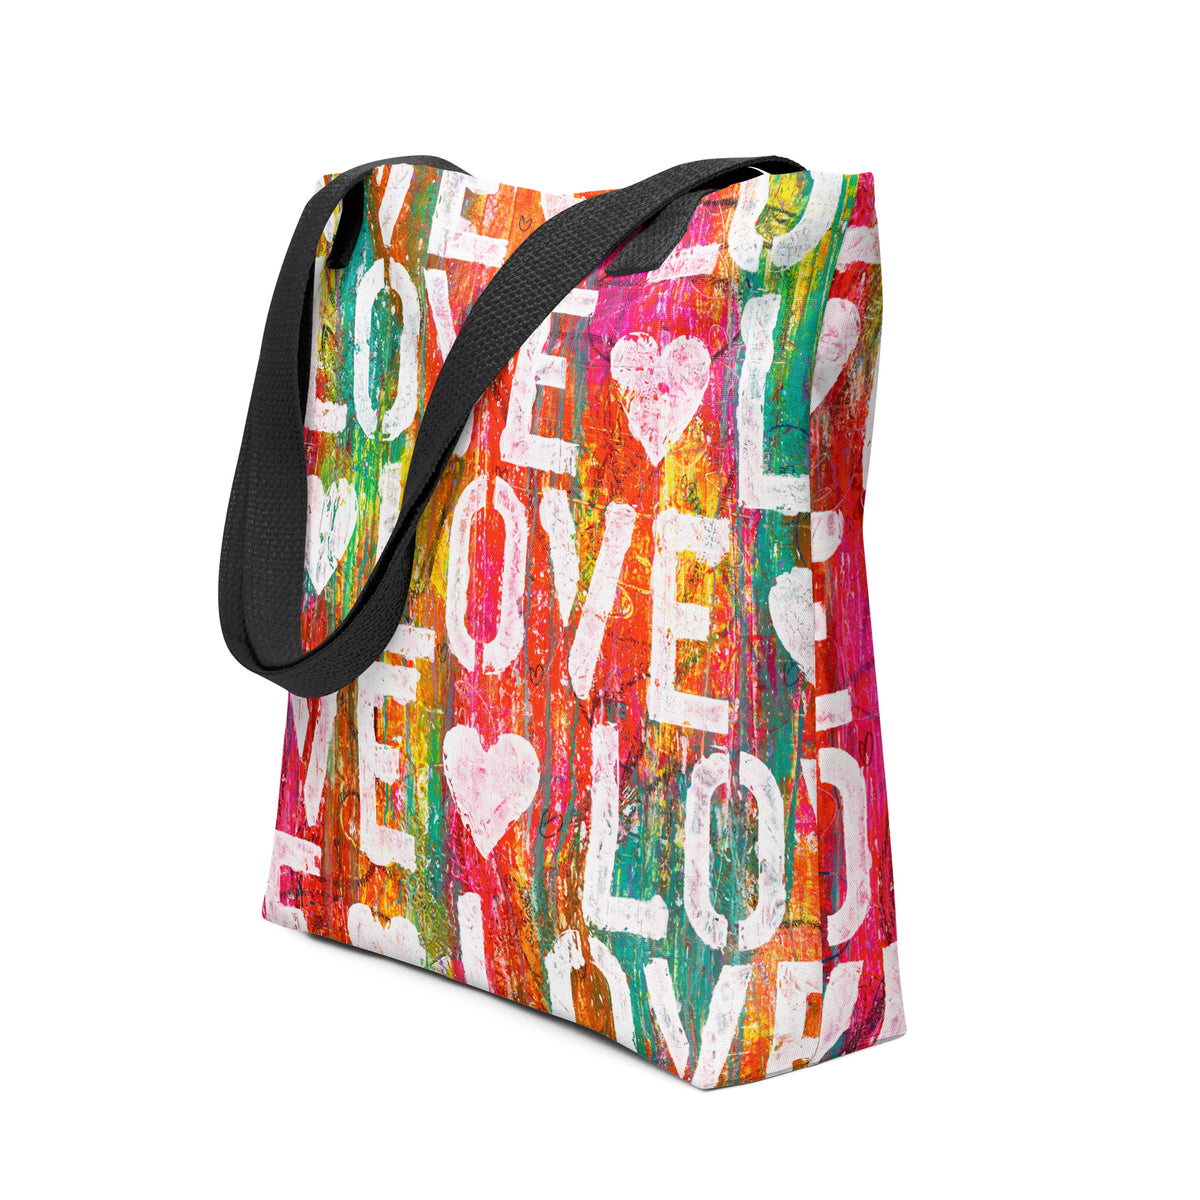 LOTS OF LOVE Tote bag